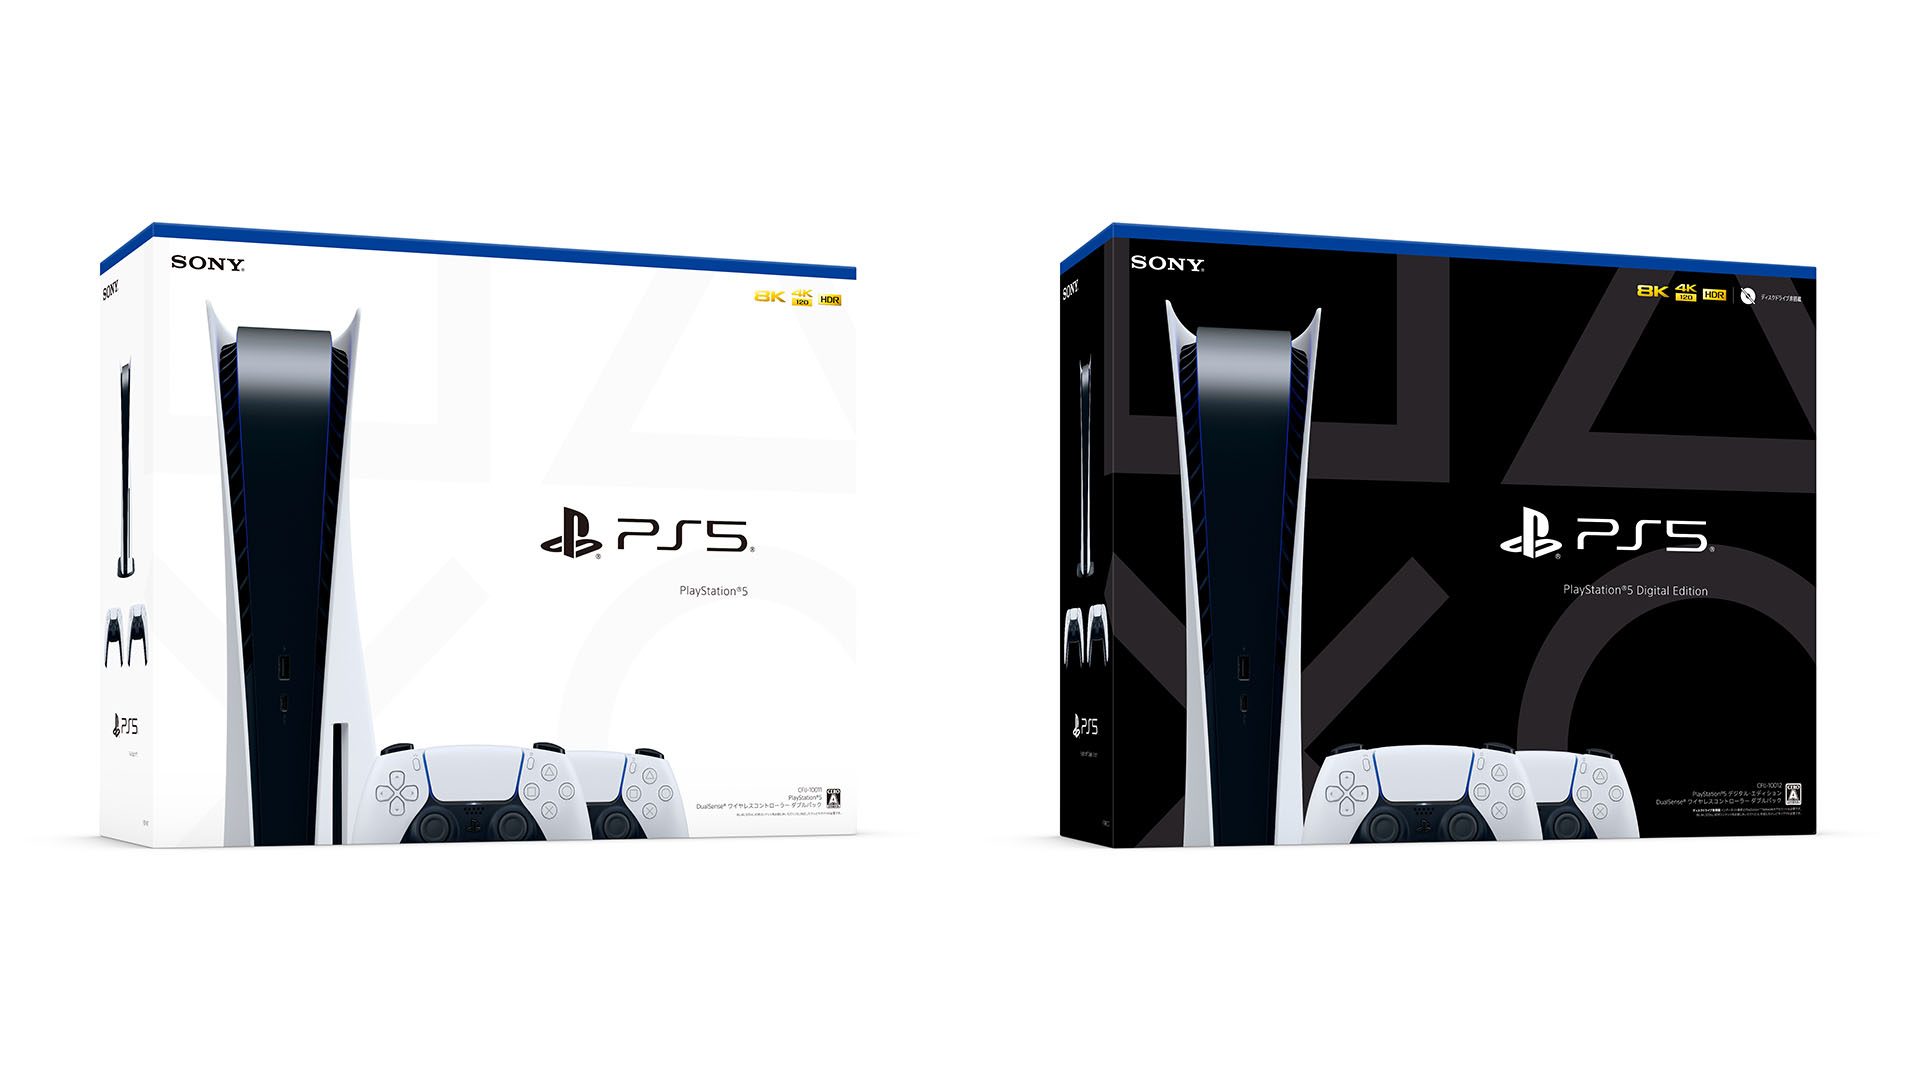 PlayStation5 DualSenseワイヤレスコントローラー